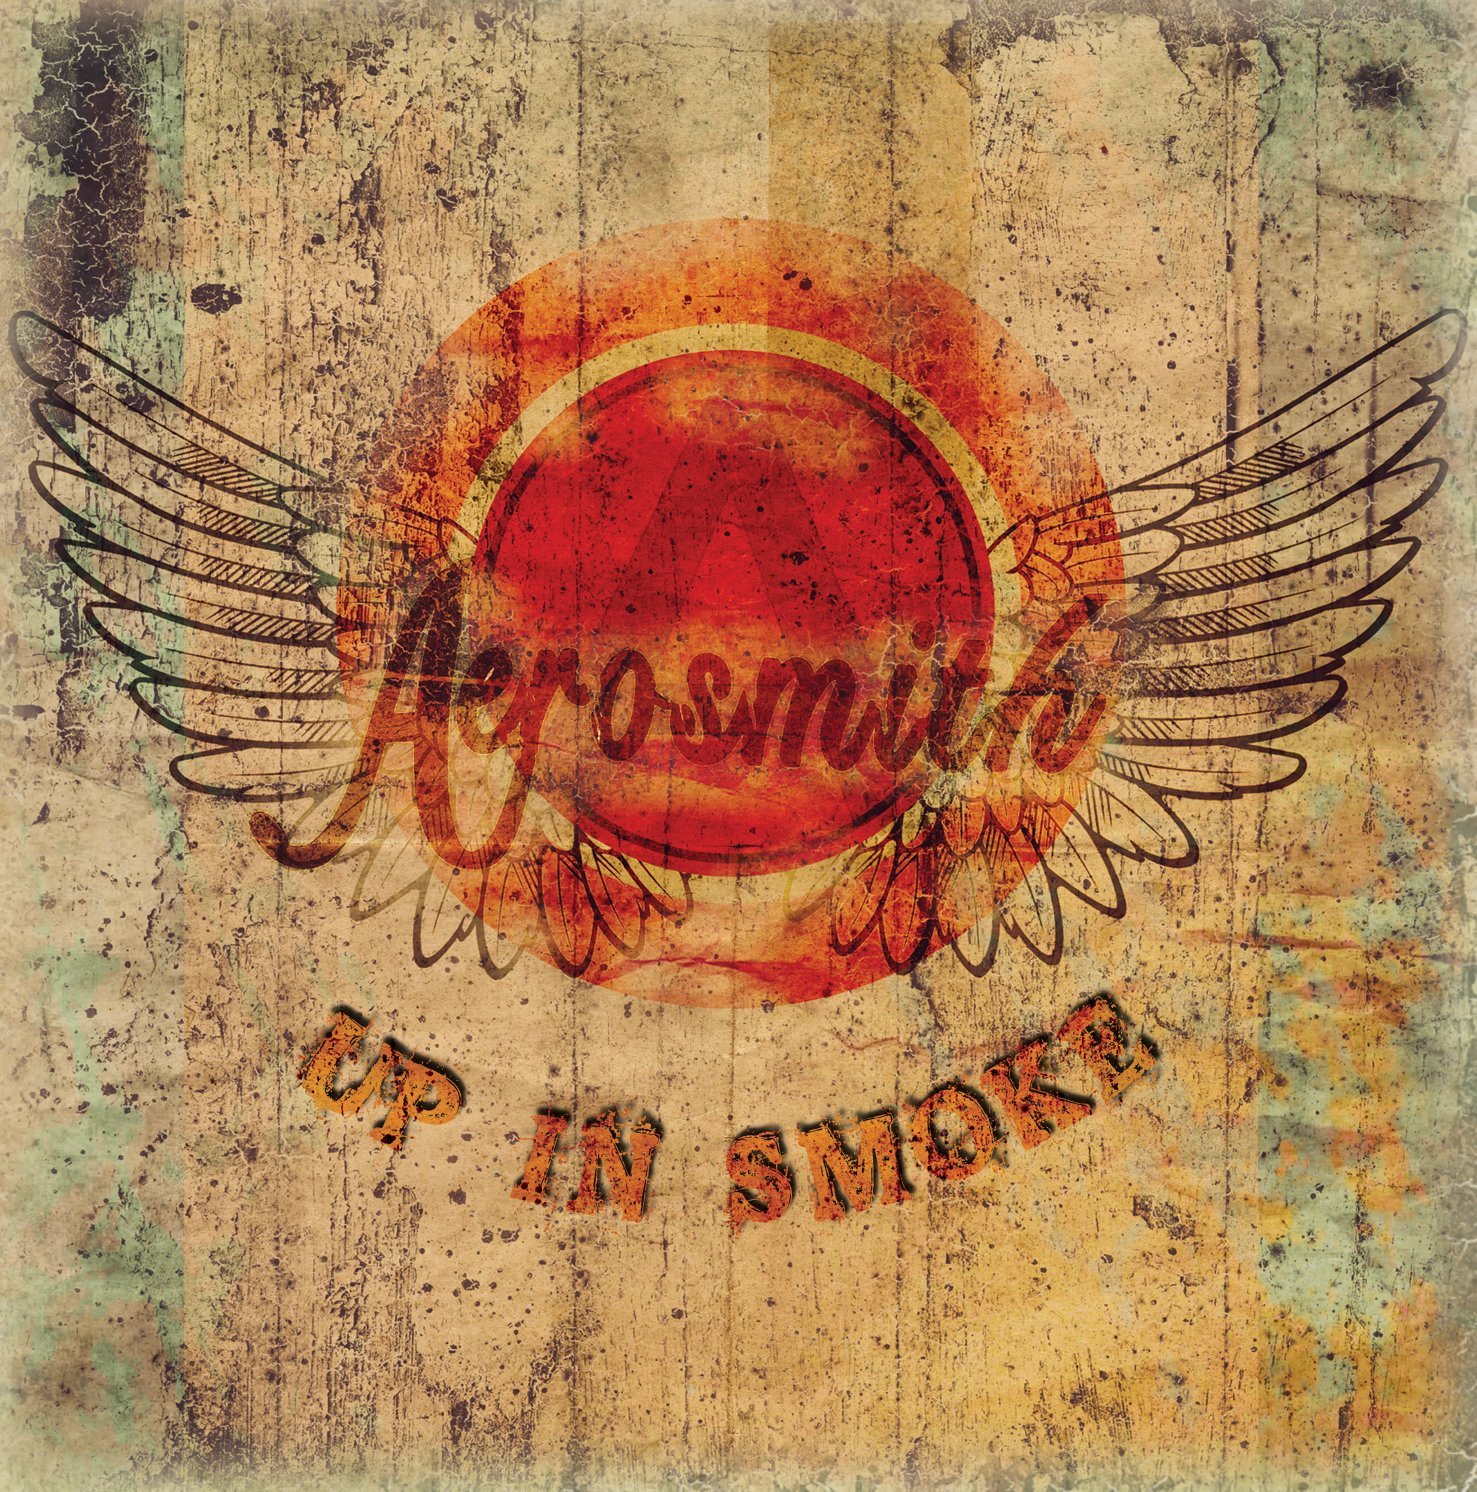 Aerosmith - Up In Smoke - 2CD